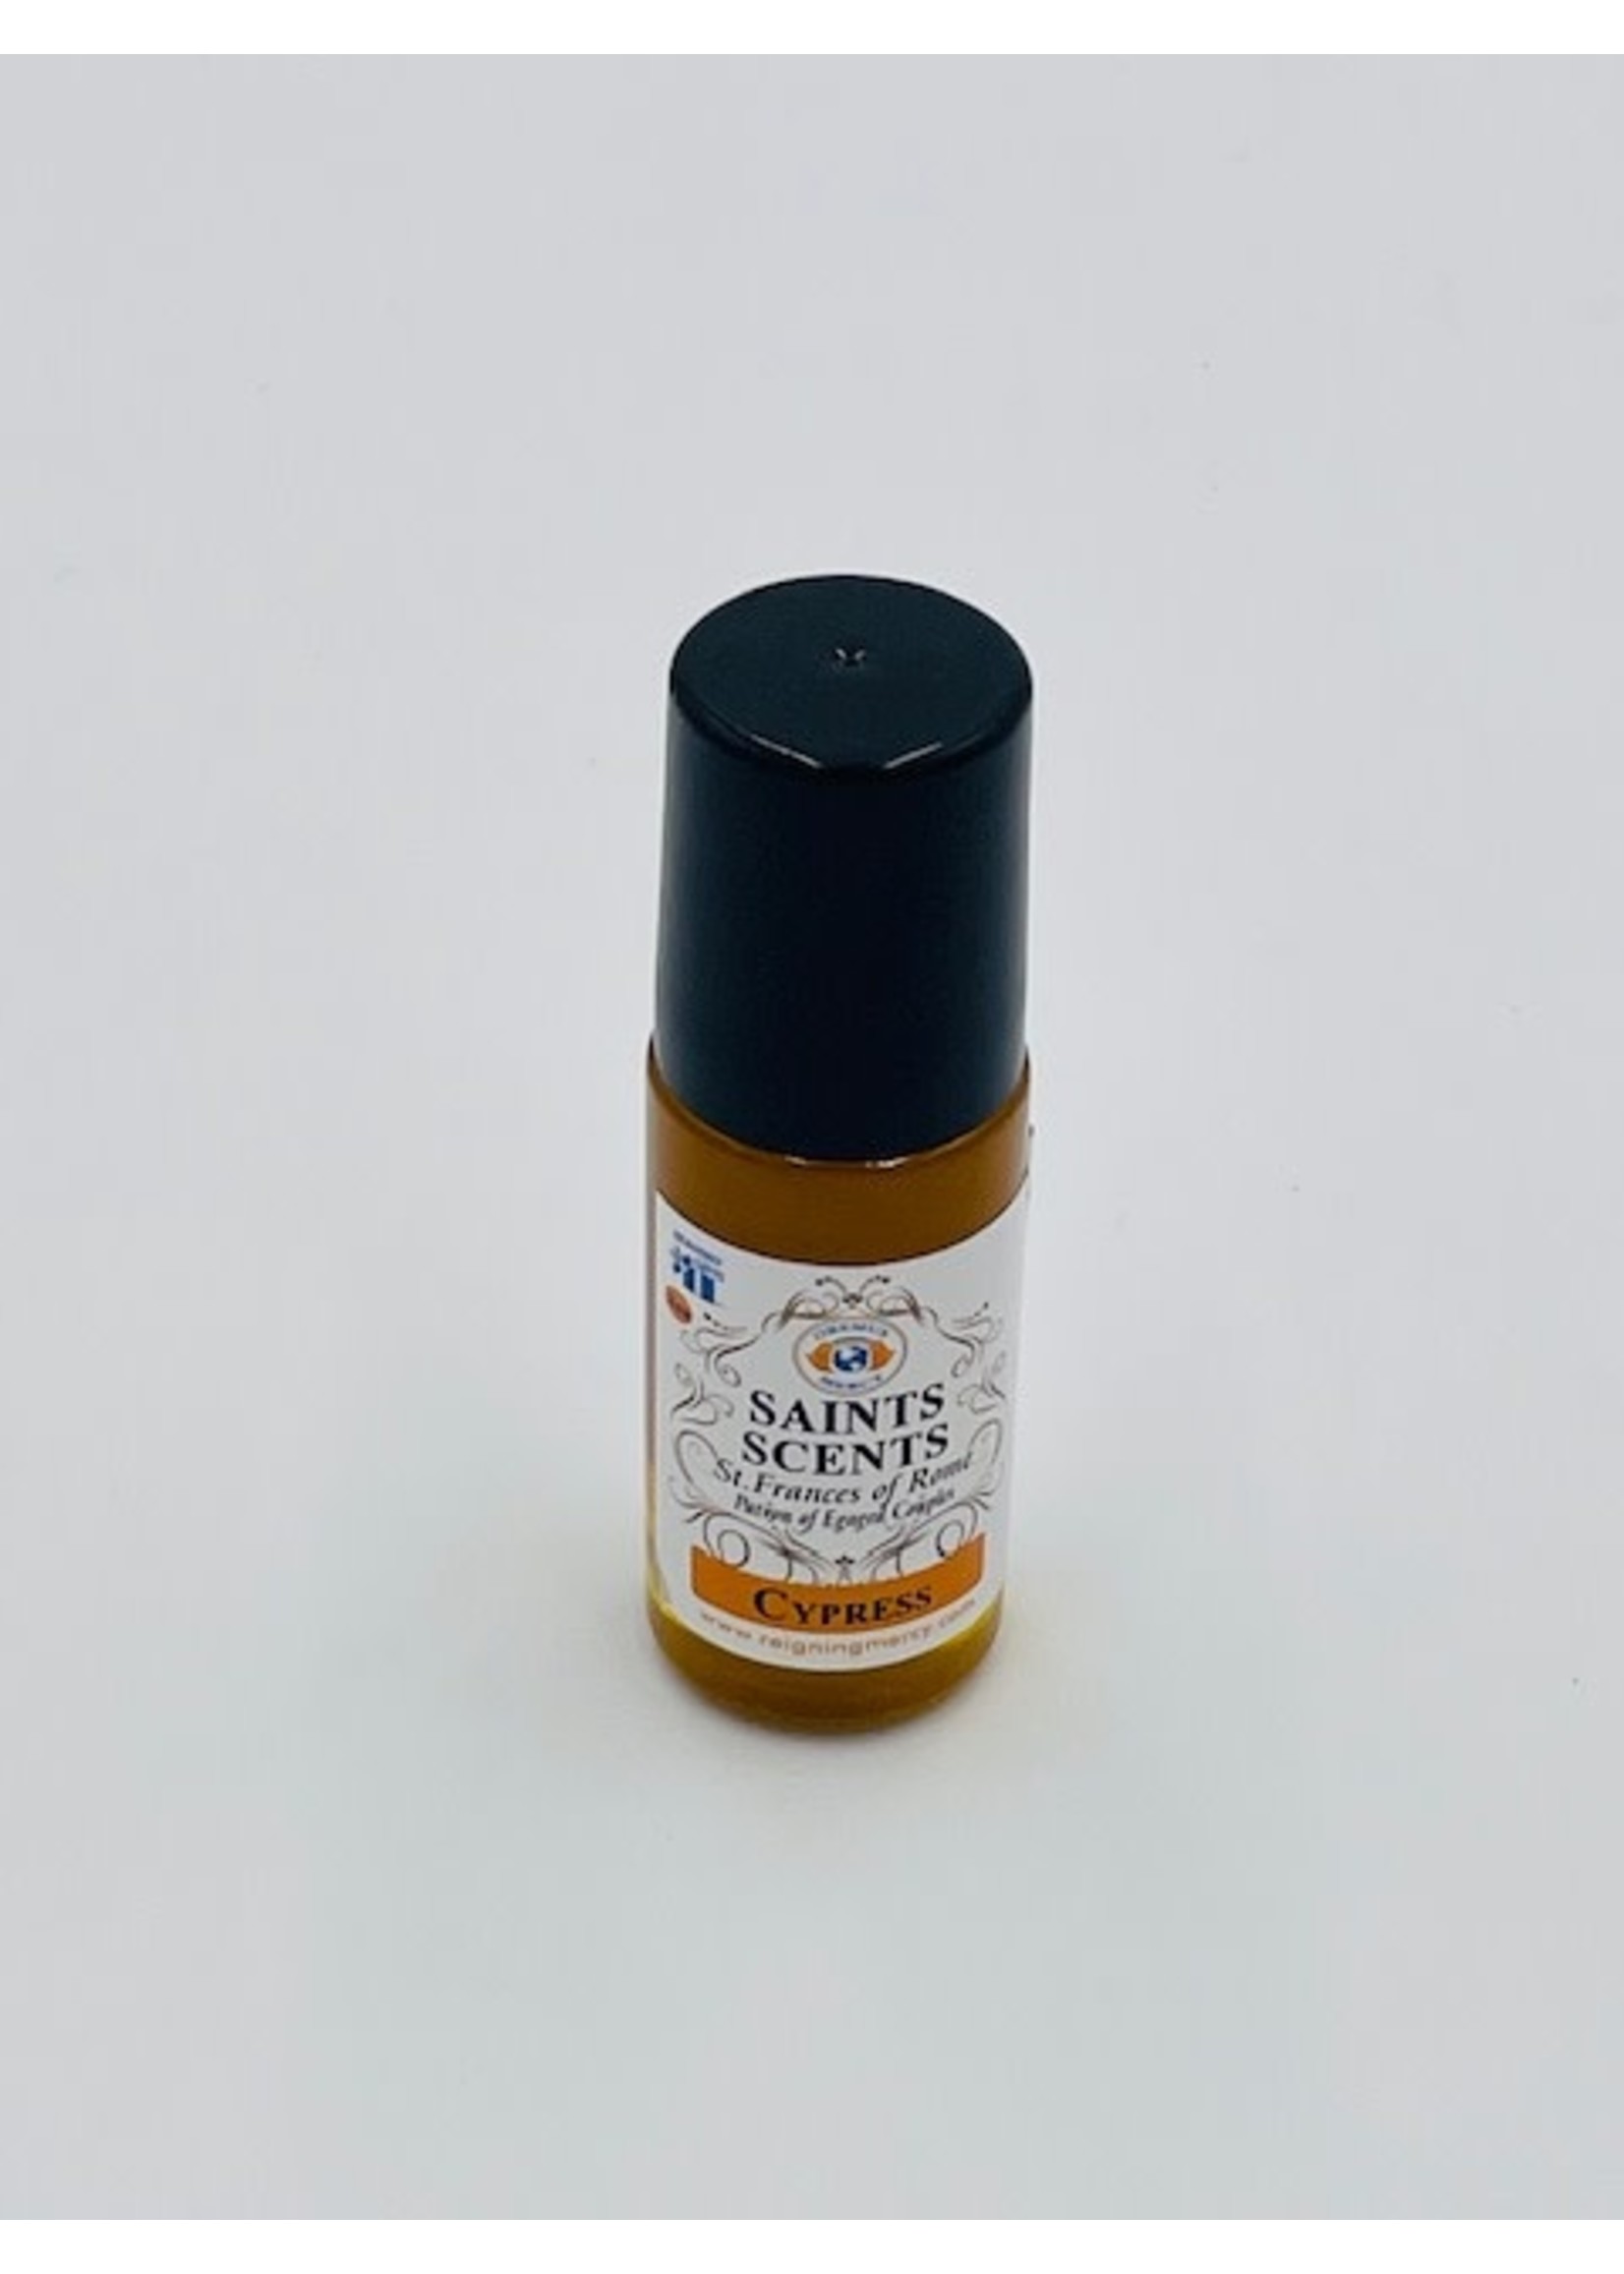 Cypress - Biblical Scented Oil  (2 oz)